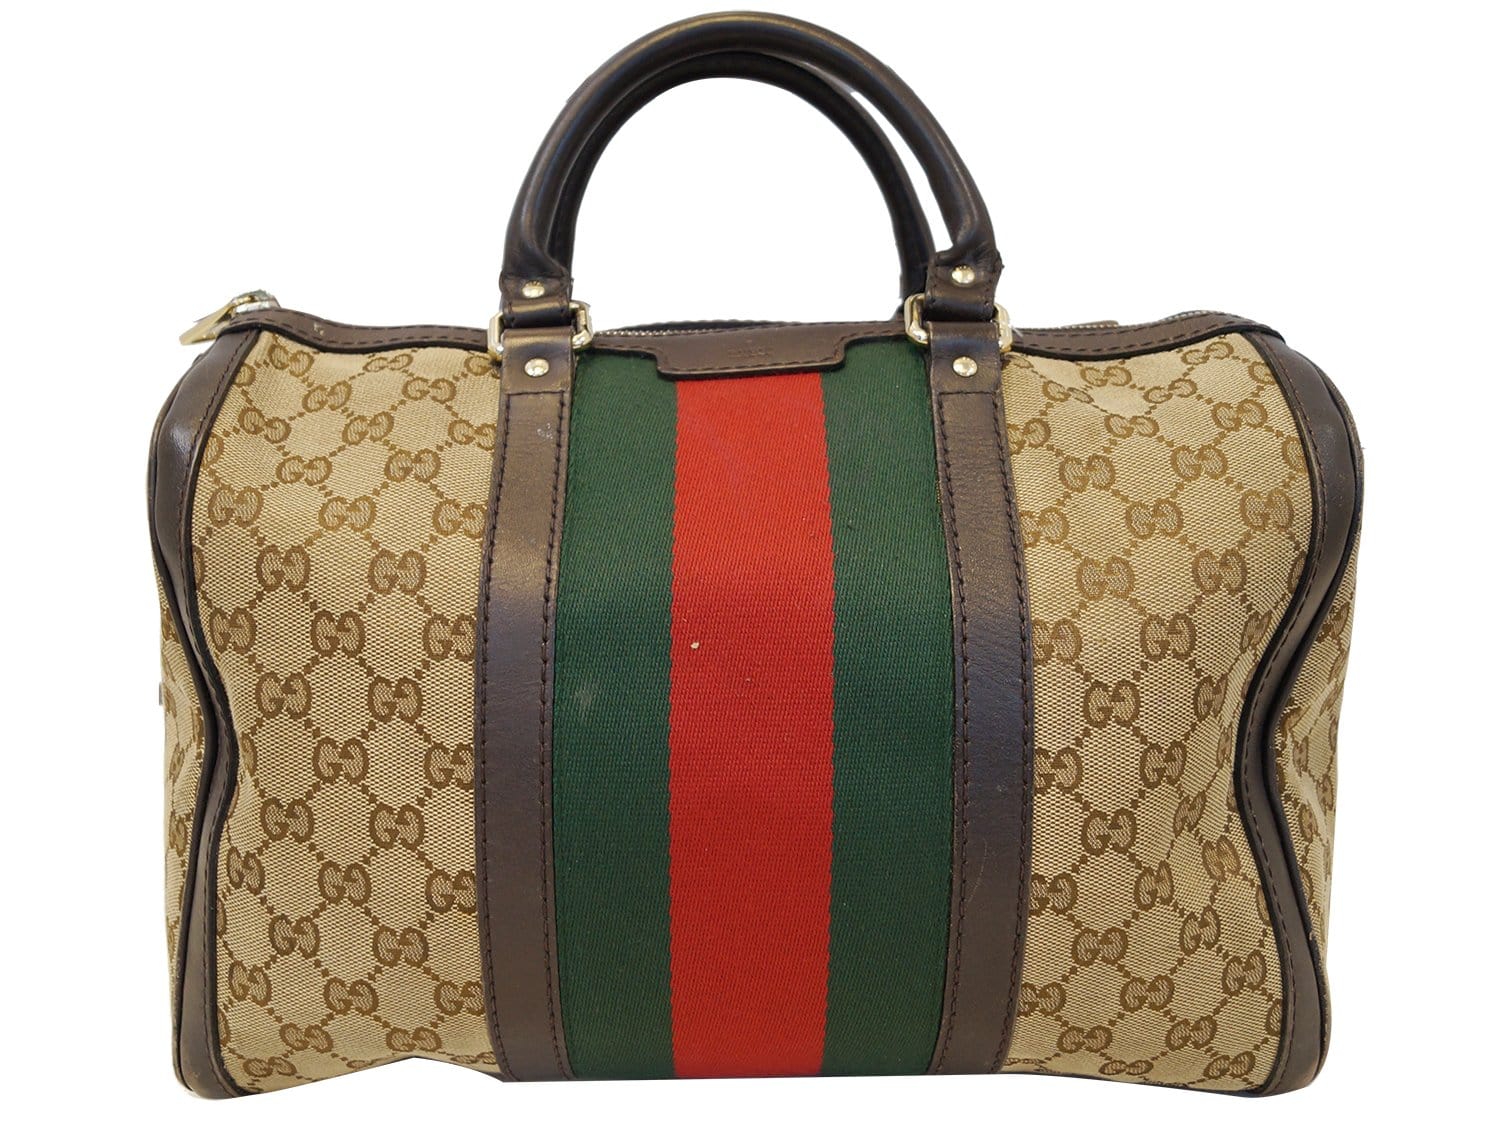 1940's Gucci Bag Gucci handbag [Digital image]. (n.d.). Retrieved from